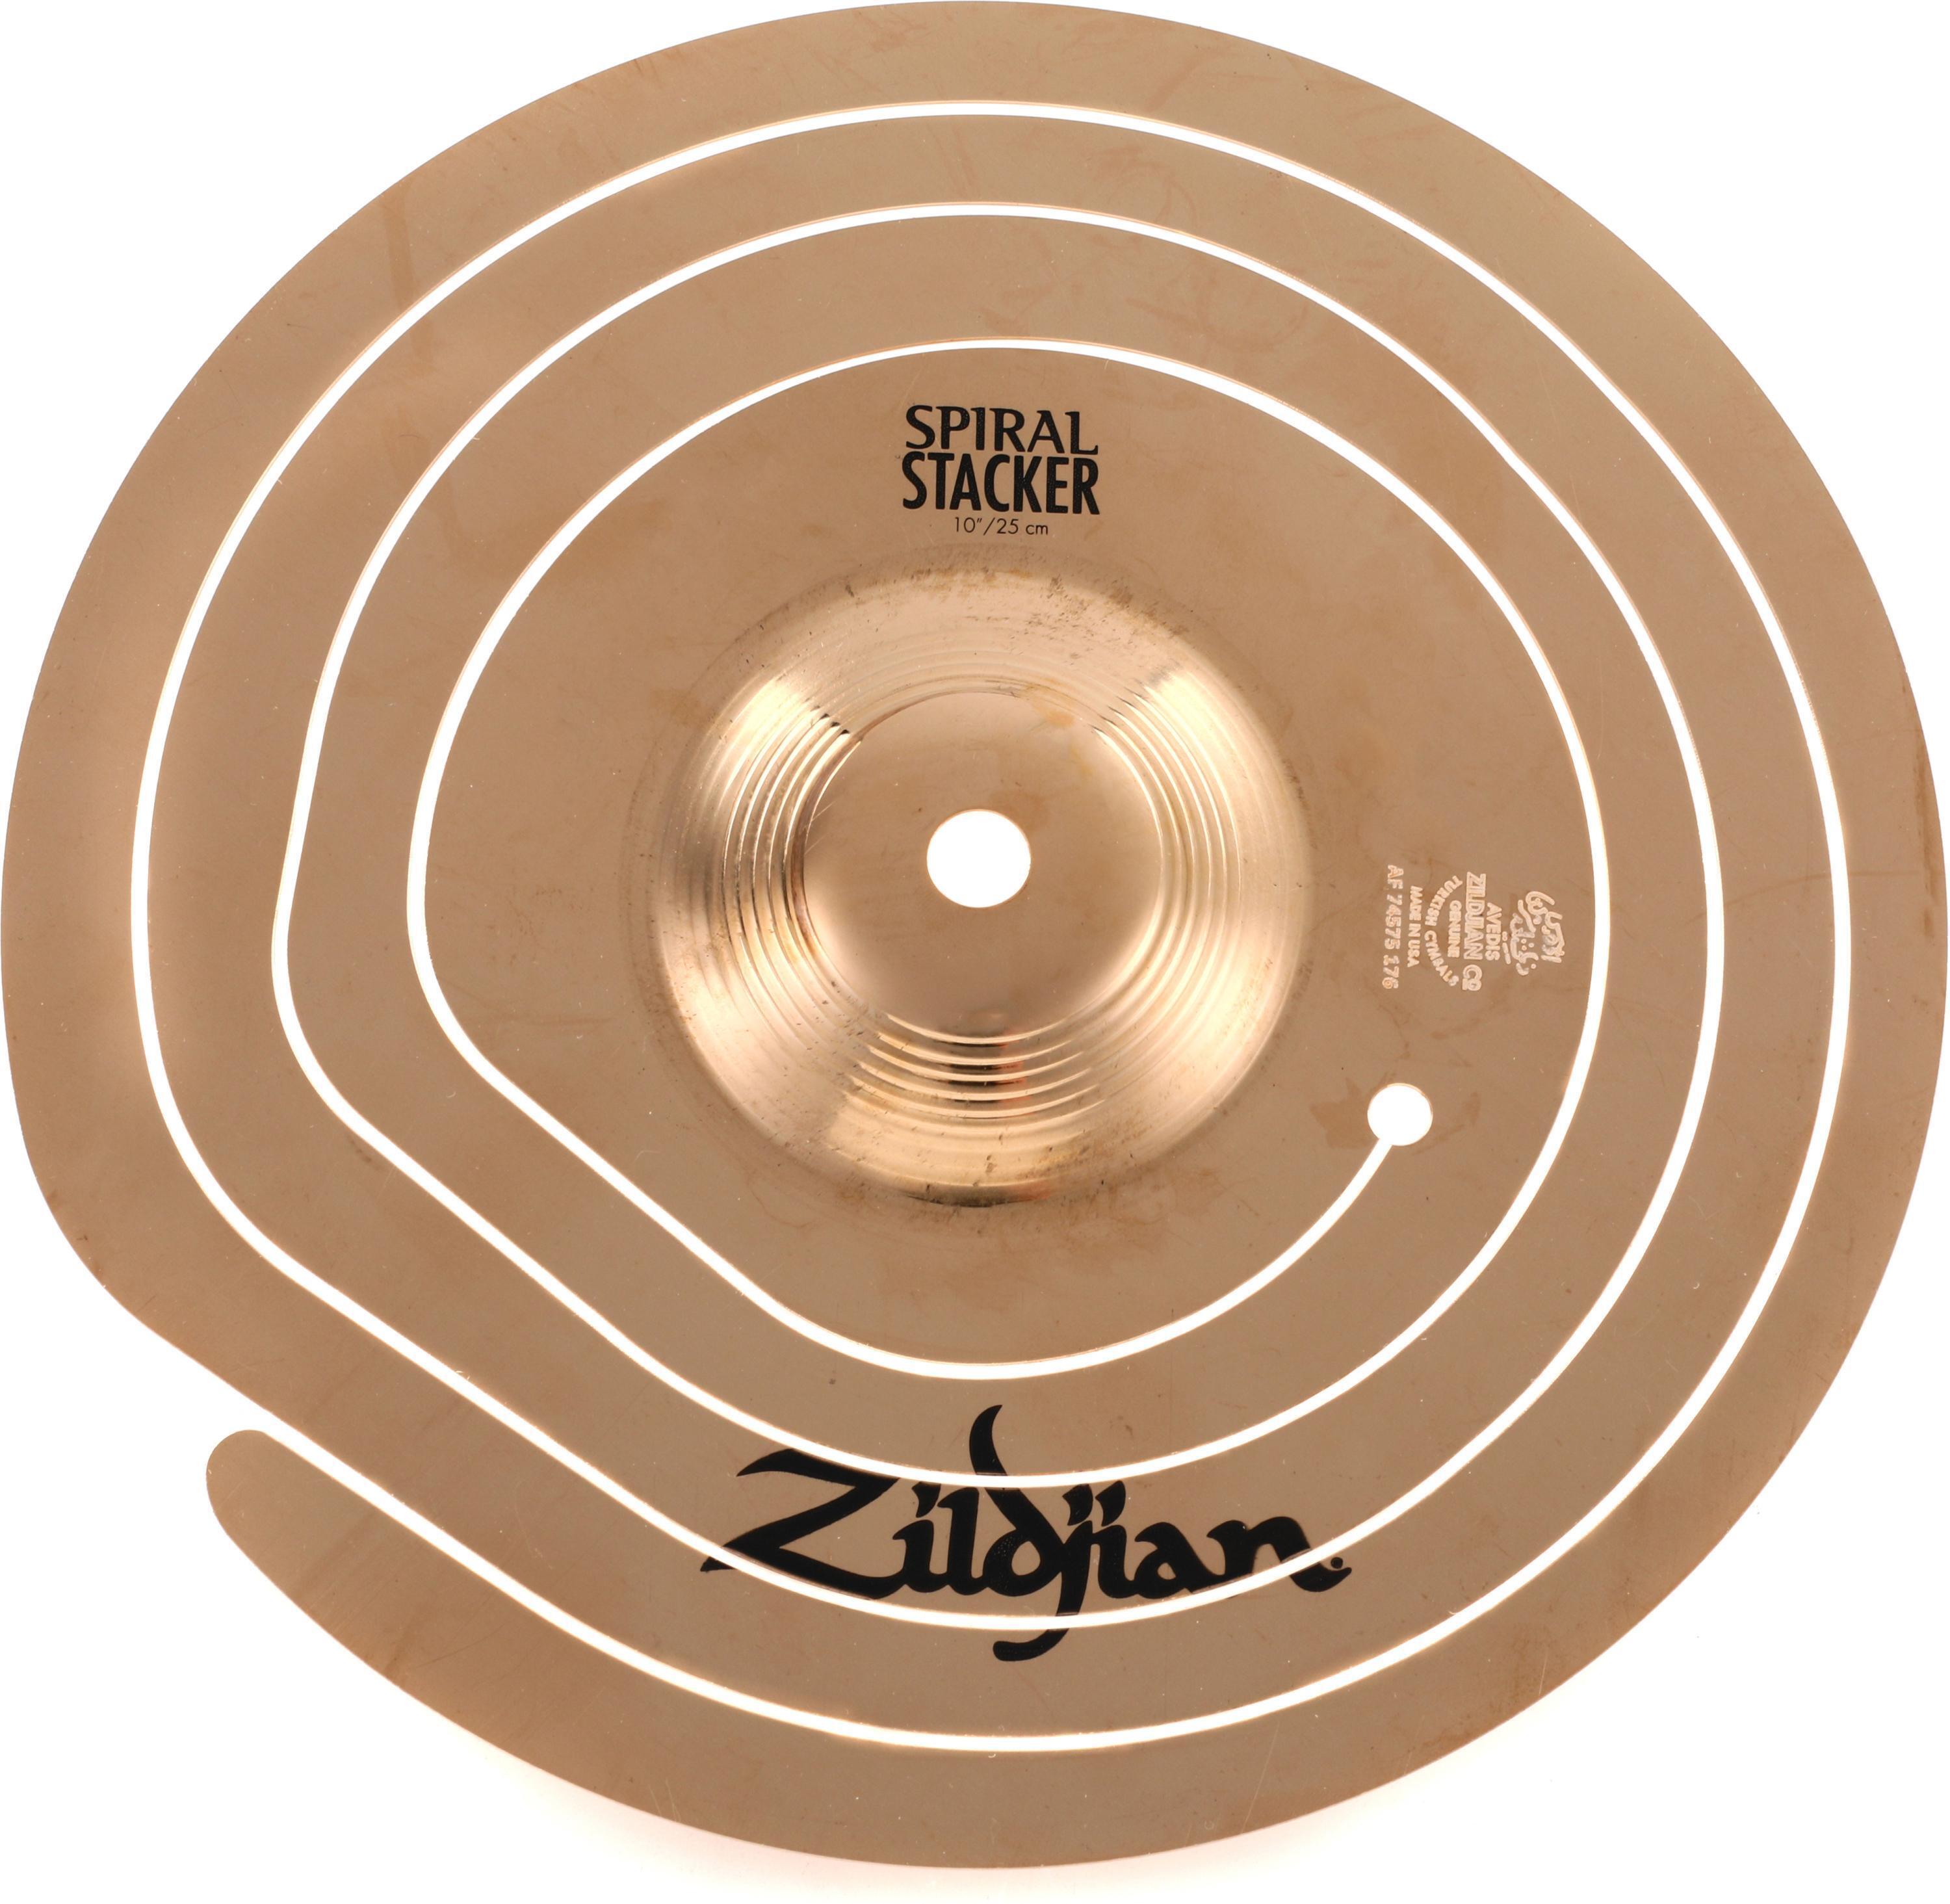 Zildjian 10 inch fx Spiral Stacker Cymbal | Sweetwater